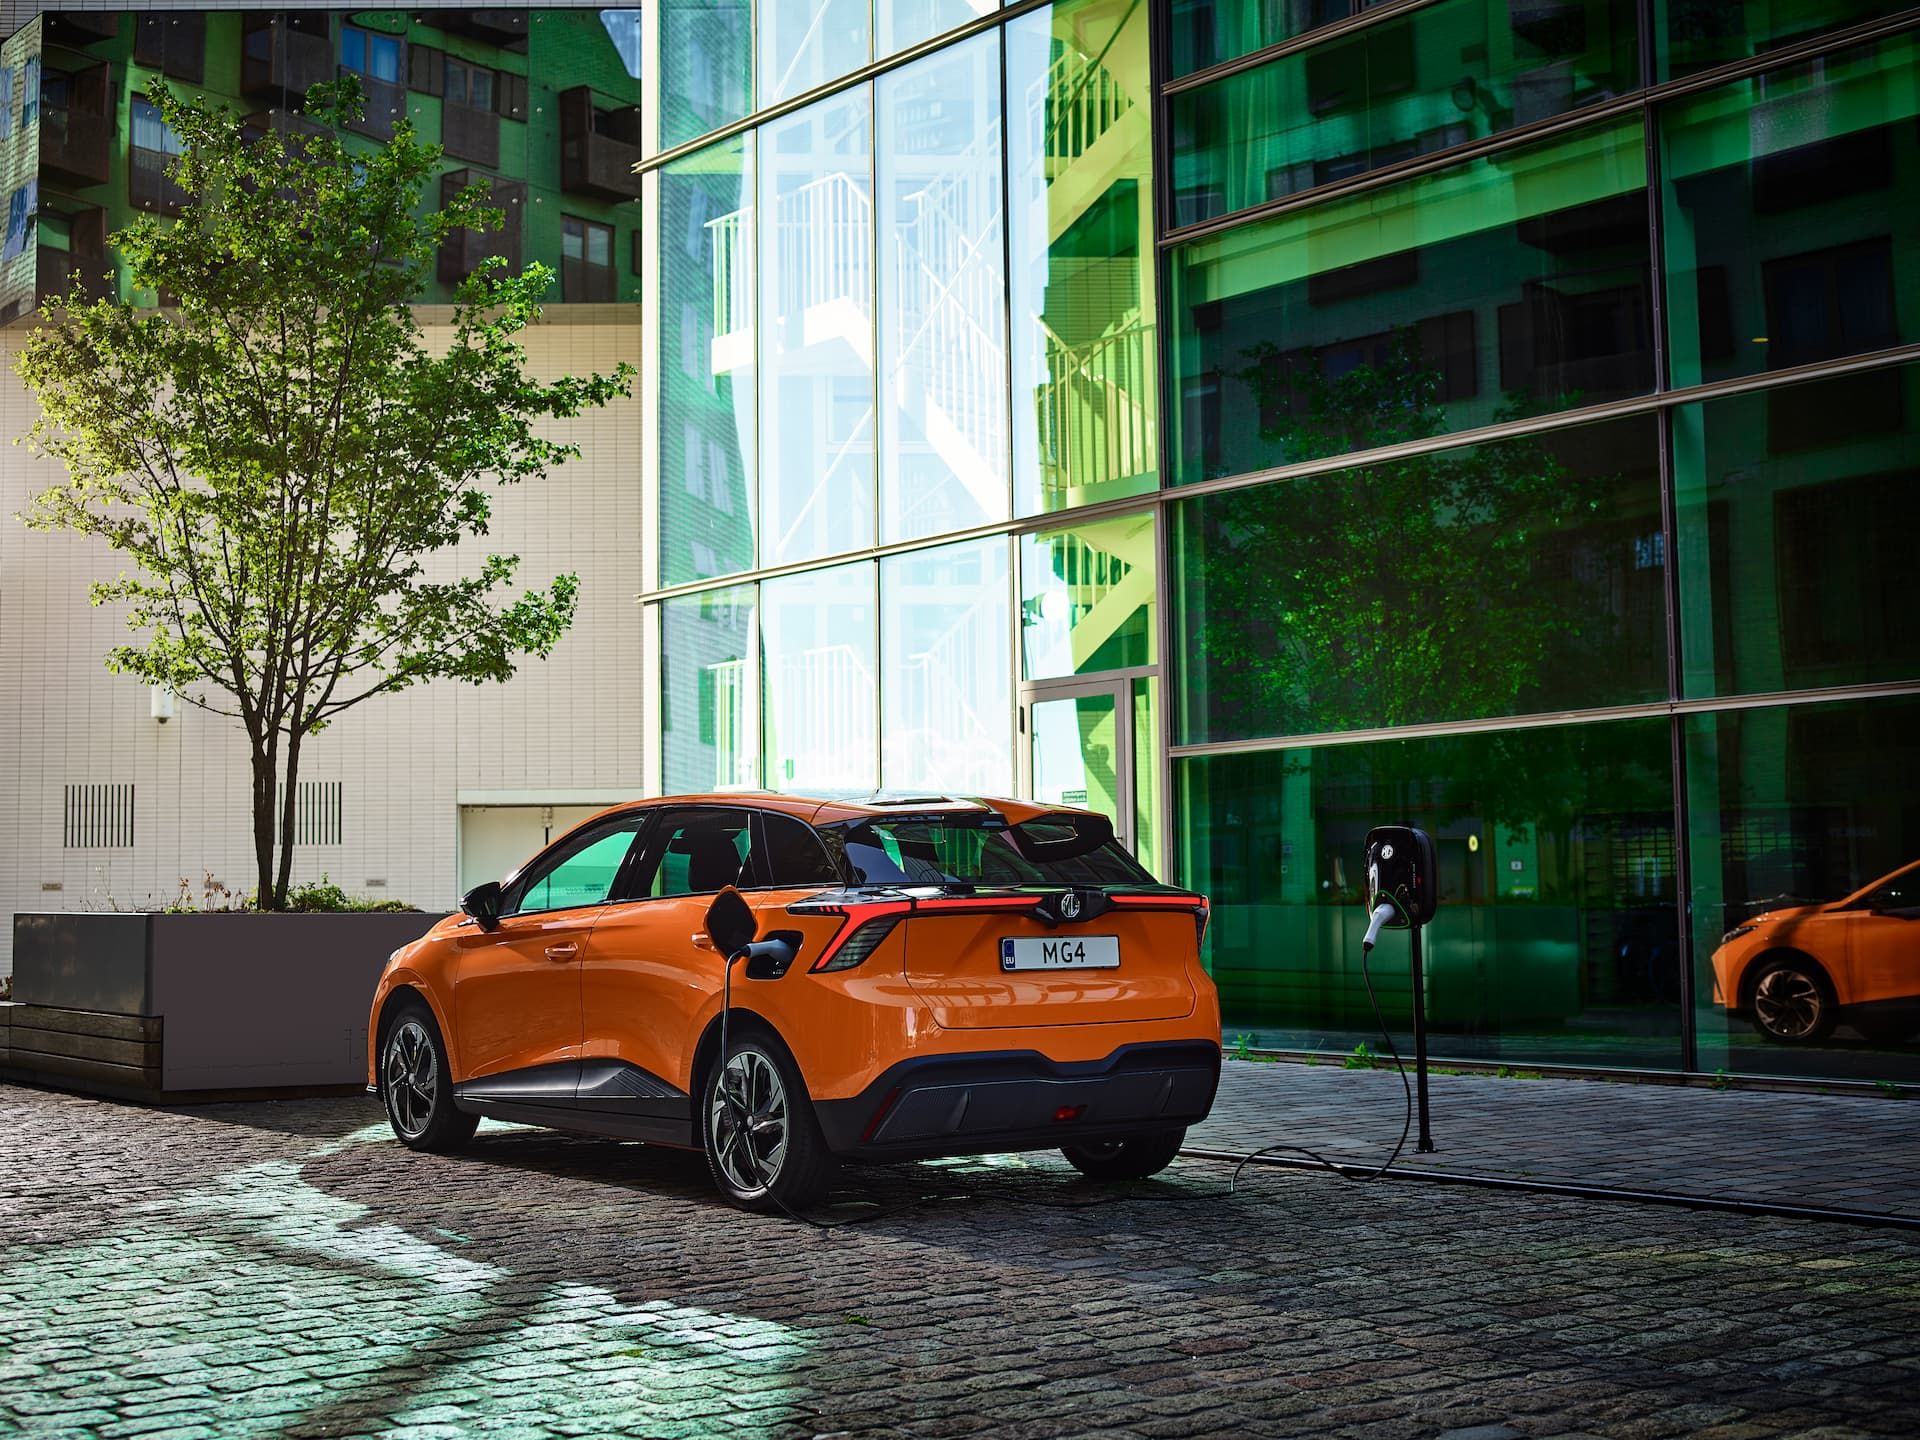 Orange MG 4 EV charging from kerbside wall box in city